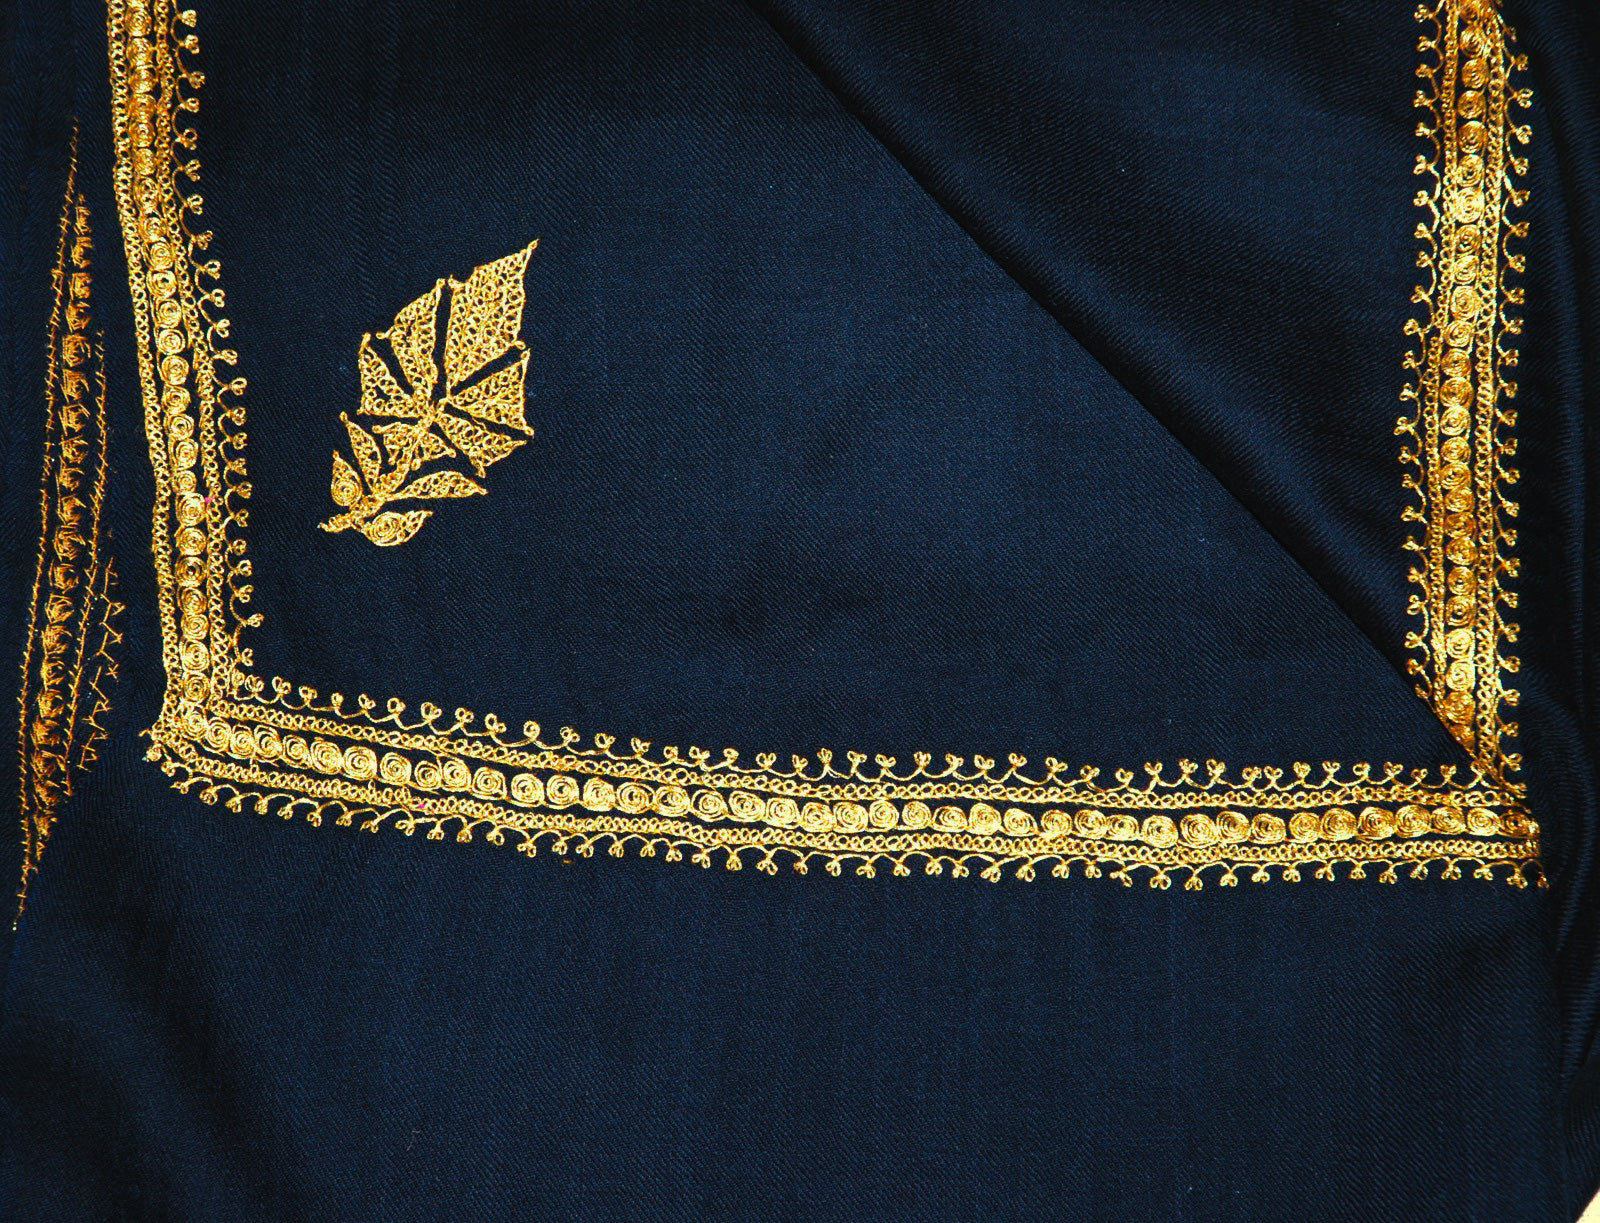 Embroidered Wool Shawl Navy, Gold "Tilla" Sozni Embroidery #WS-911